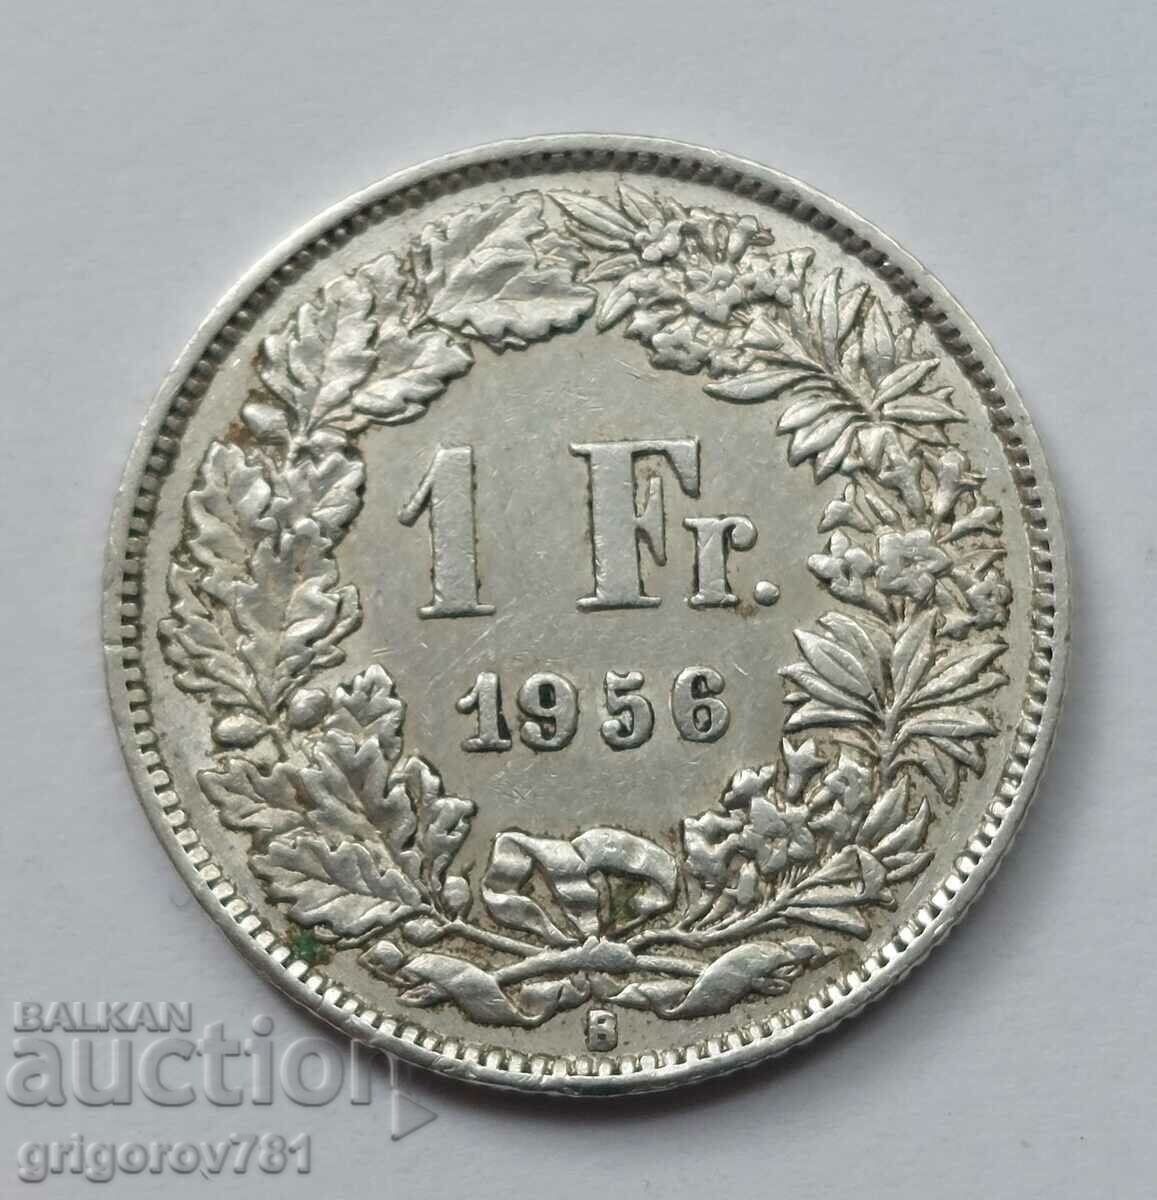 1 Franc Silver Switzerland 1956 B - Silver Coin #21